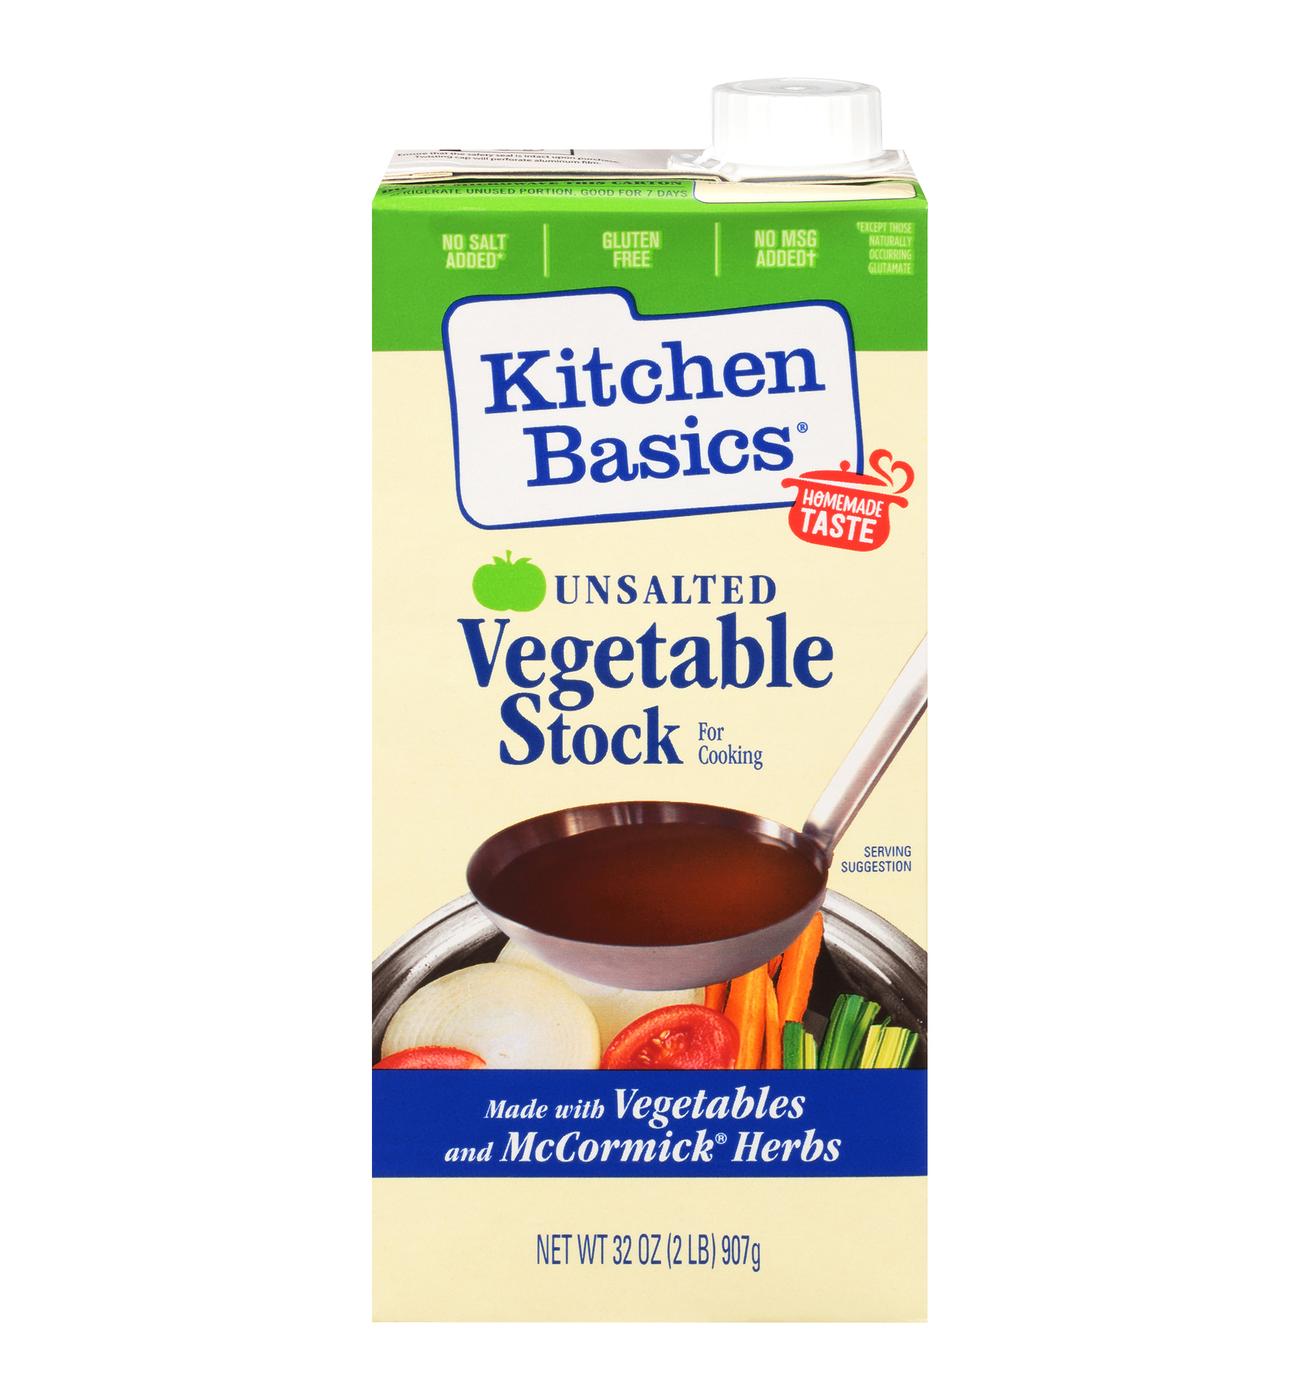 Kitchen Basics Unsalted Vegetable Stock; image 1 of 12